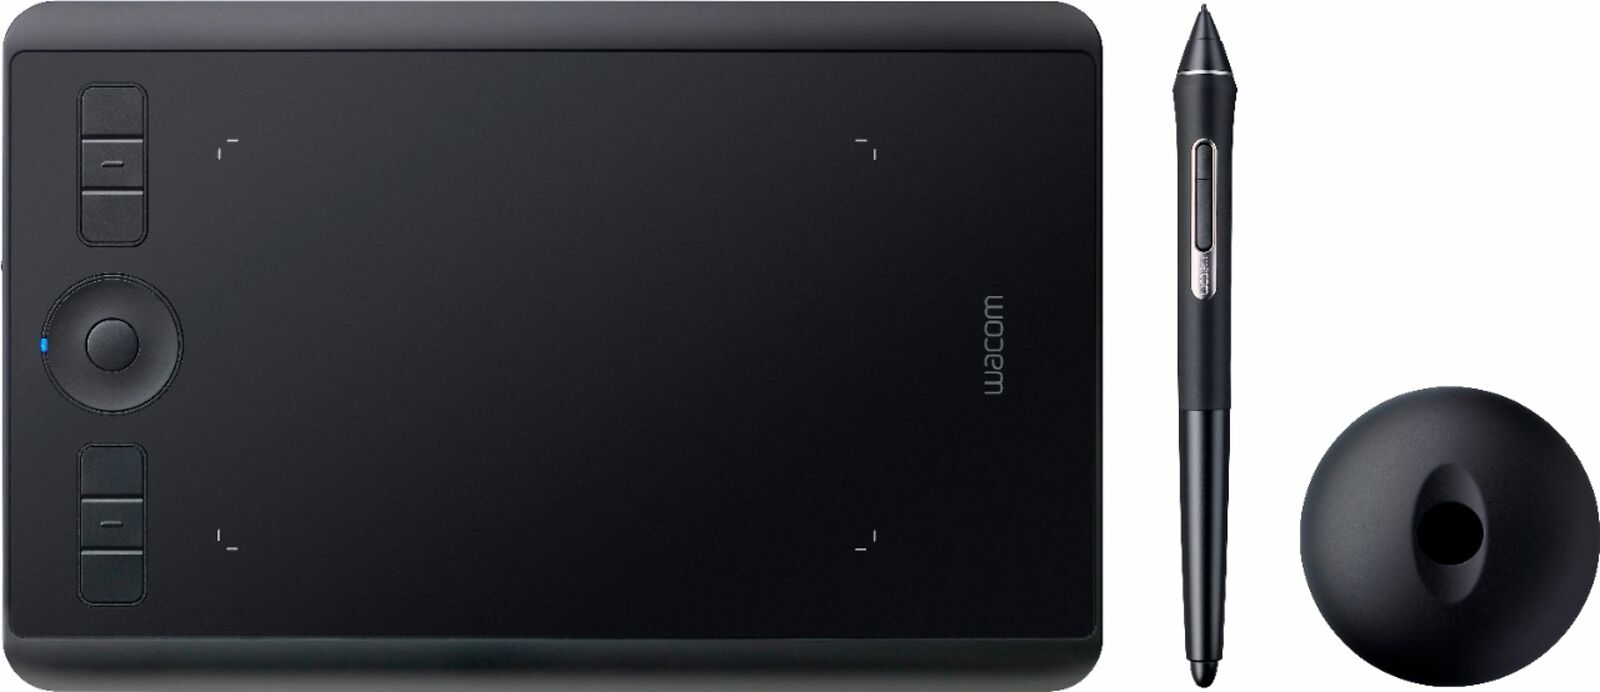 Brand New Wacom Intuos Pro Creative Pen Graphics Tablet (Small) - Black